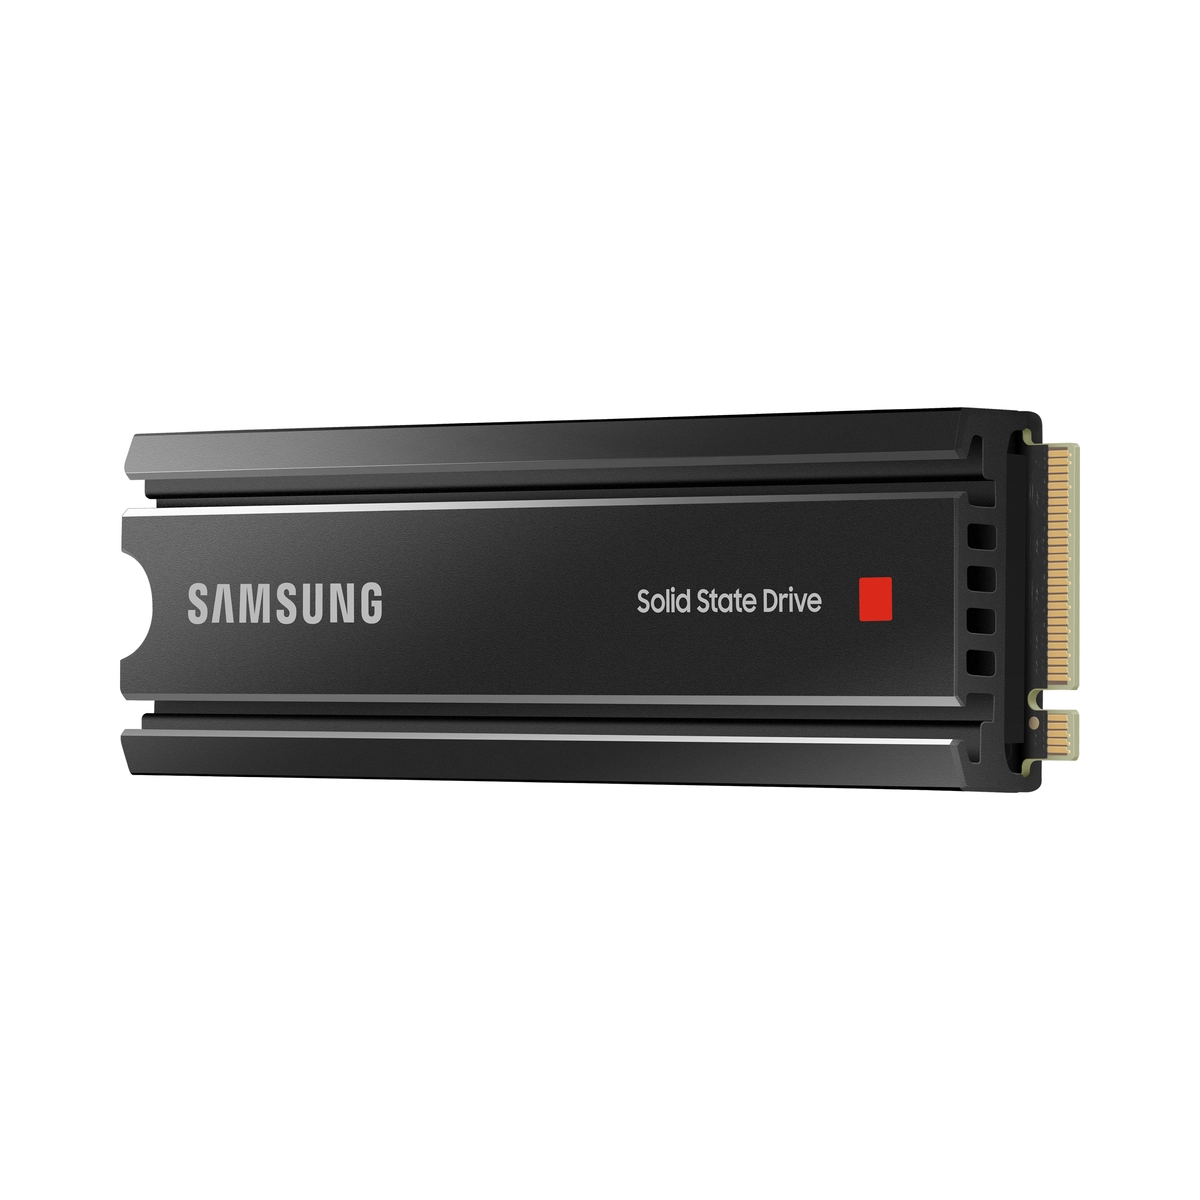 SSD Int 2TB 980 Pro H/S PCIe NVMe M.2